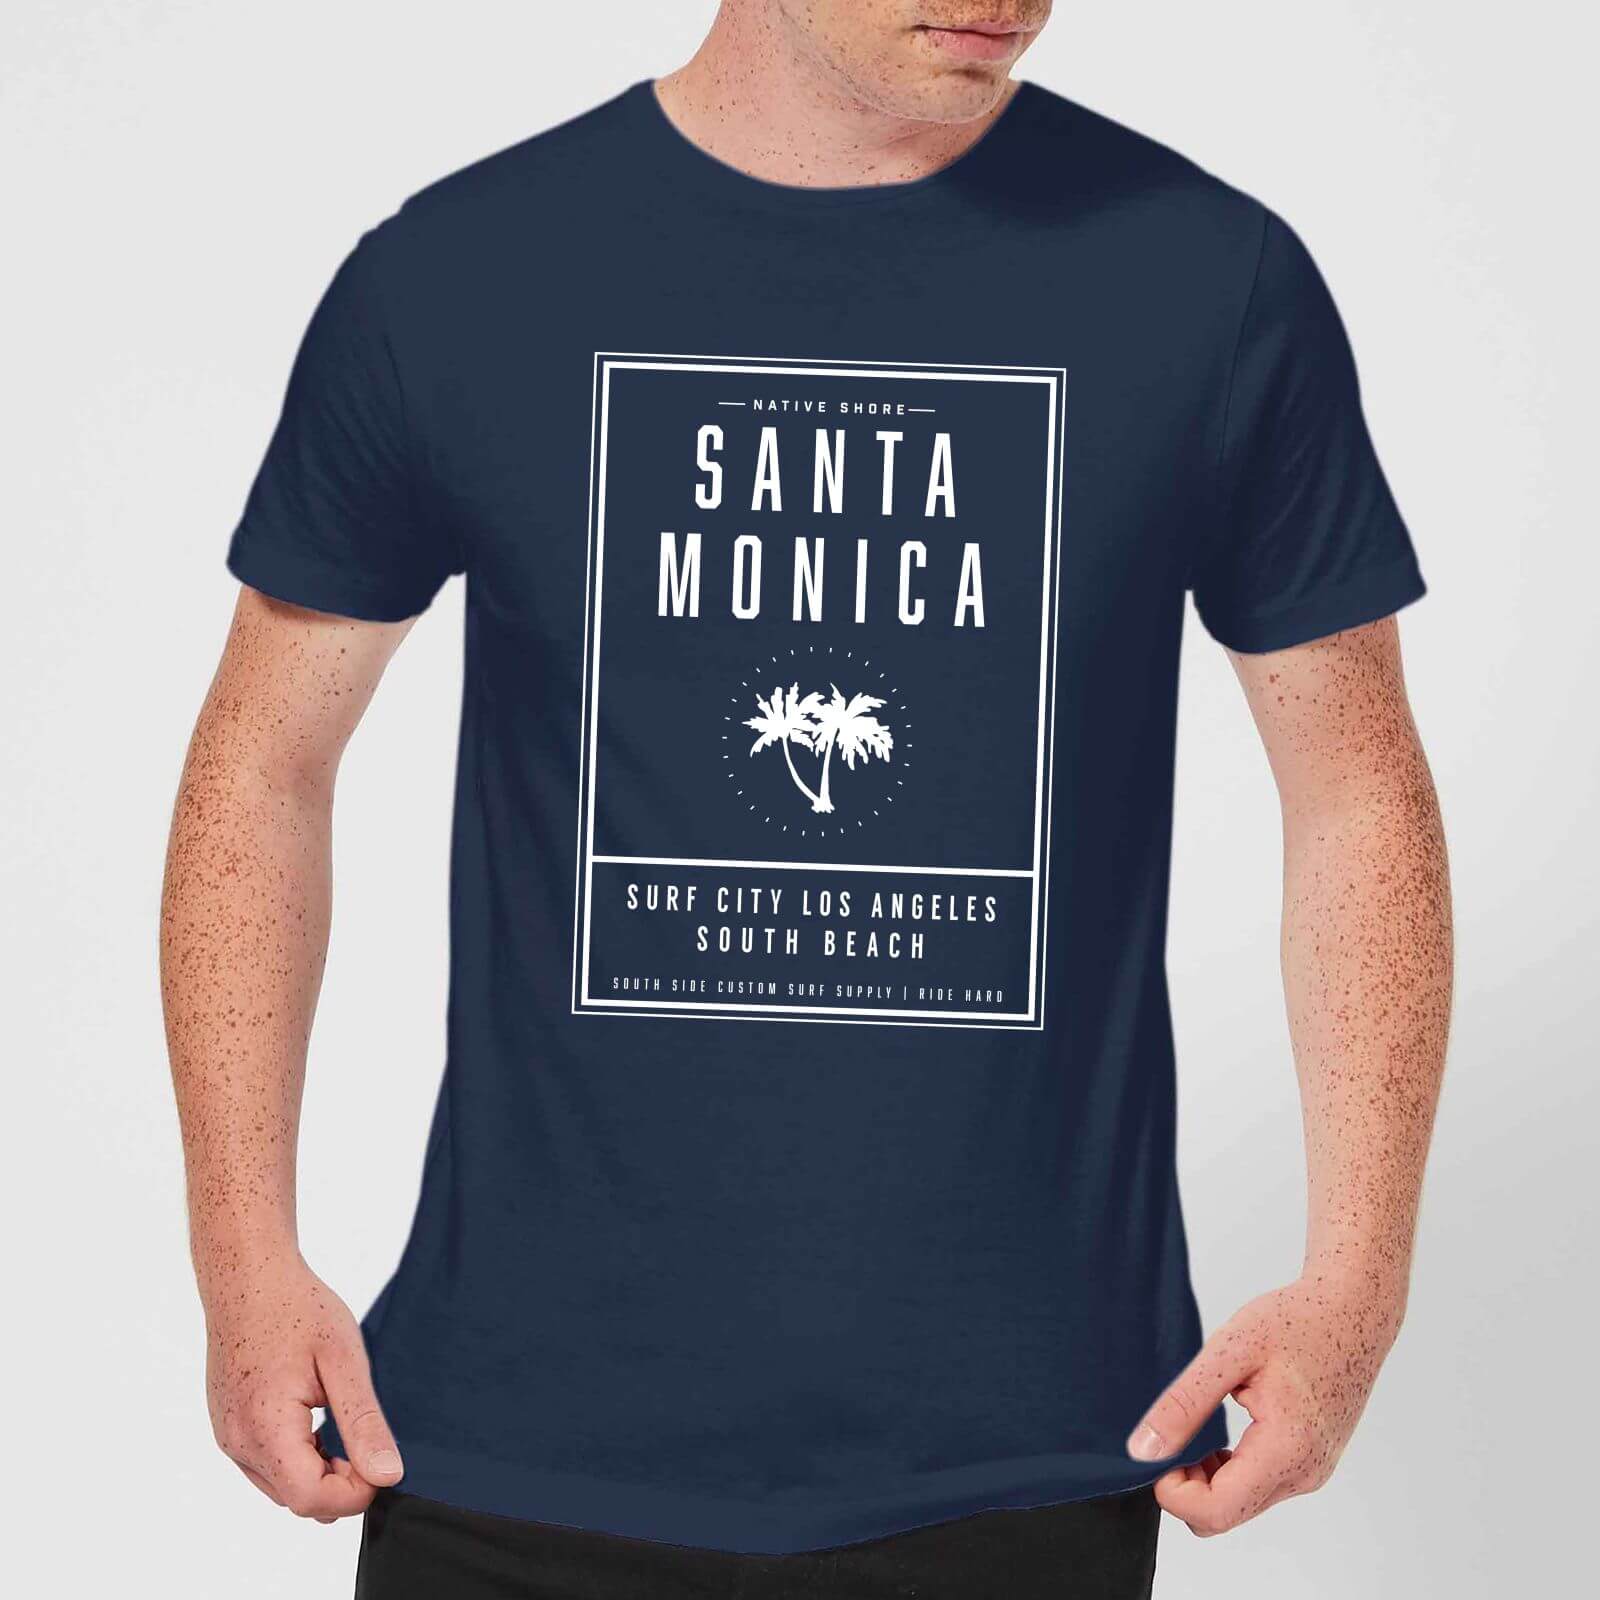 Native Shore Men's Santa Monica Surf City T-Shirt - Navy - M - Navy